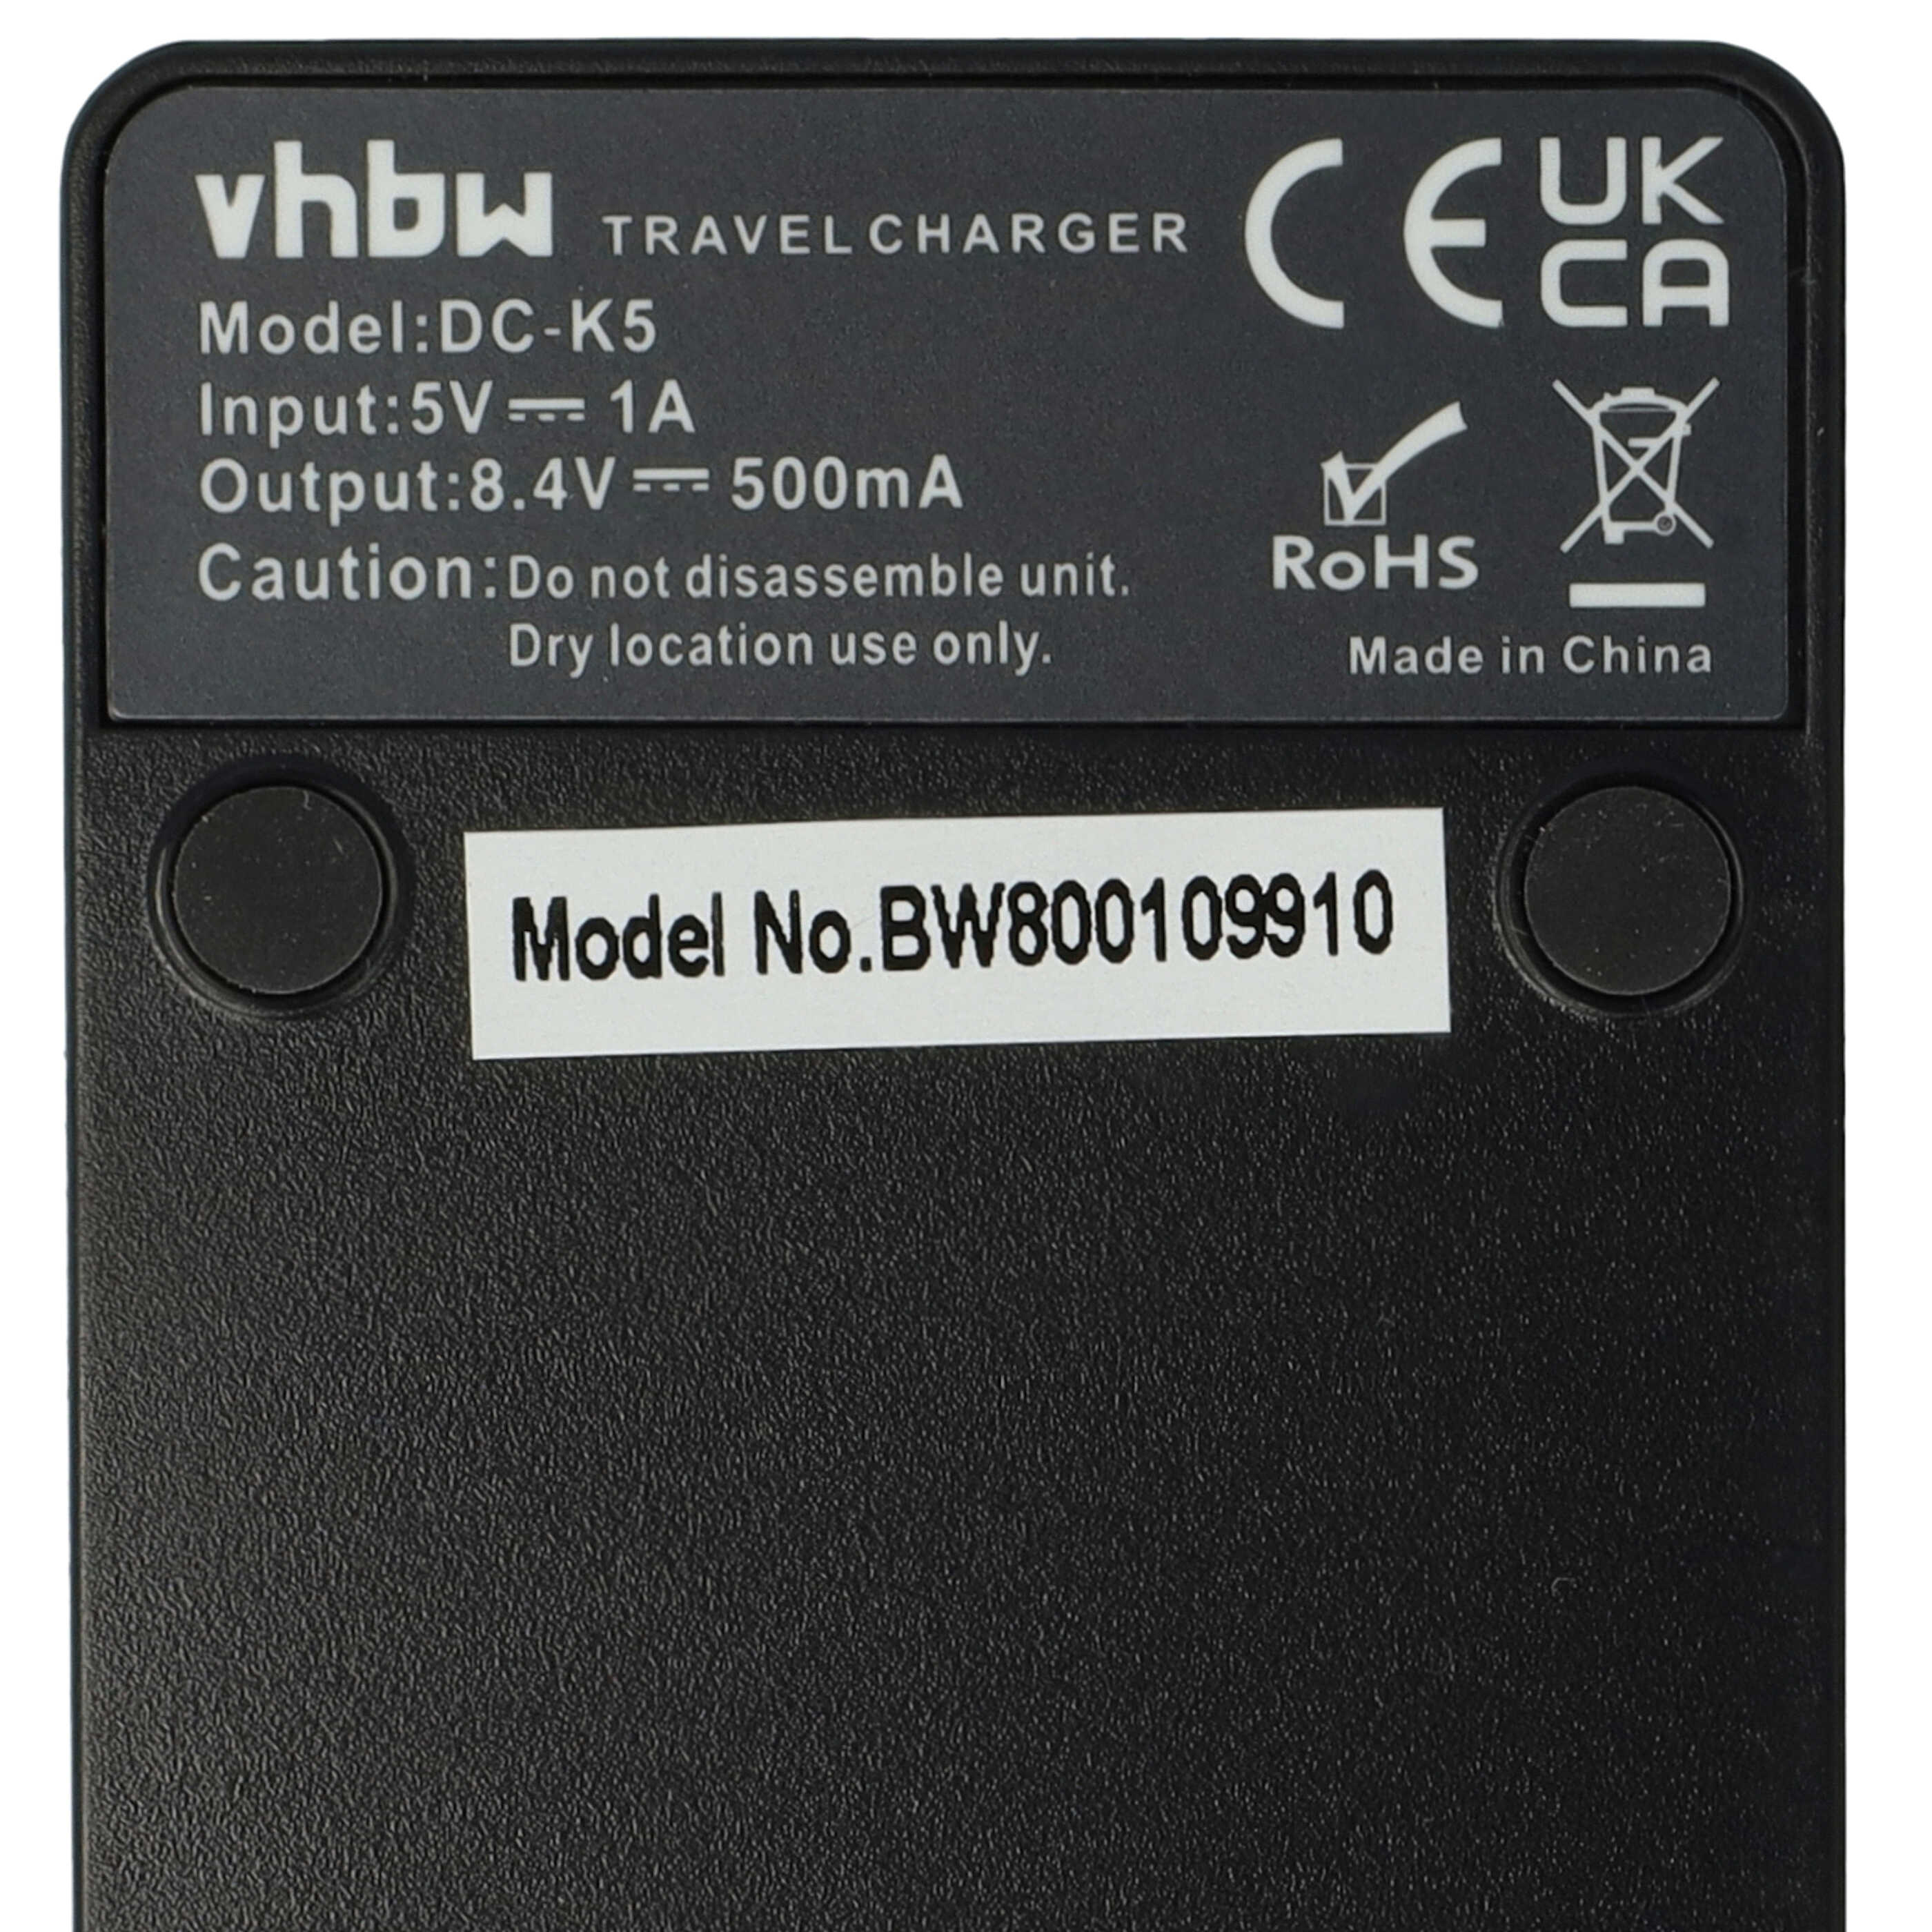 Chargeur pour appareil photo HDC-SD1 